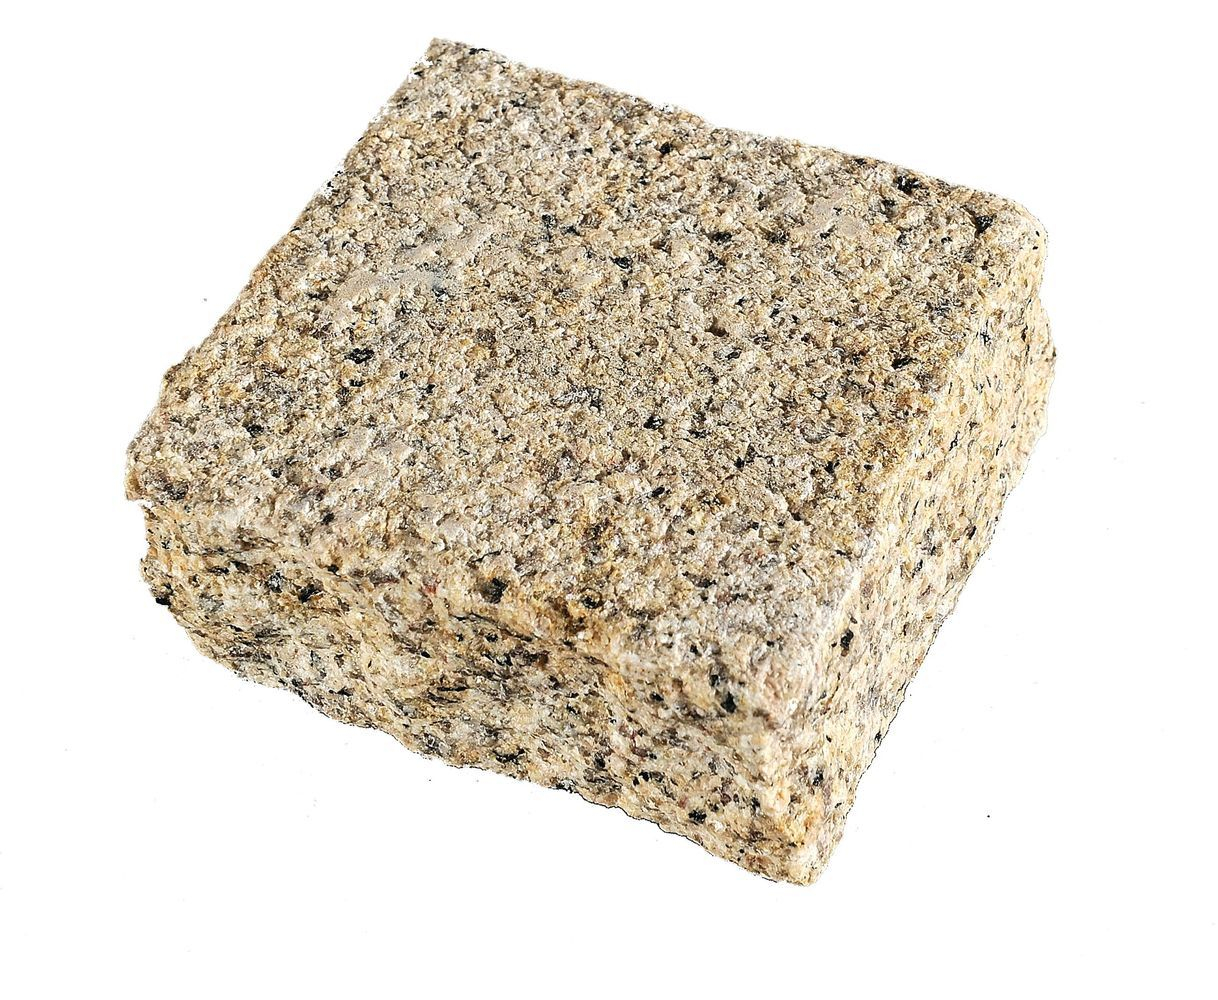 pave-granit-10x10x4-jaune-safran-bouch-bord-clive-76u-m2-1